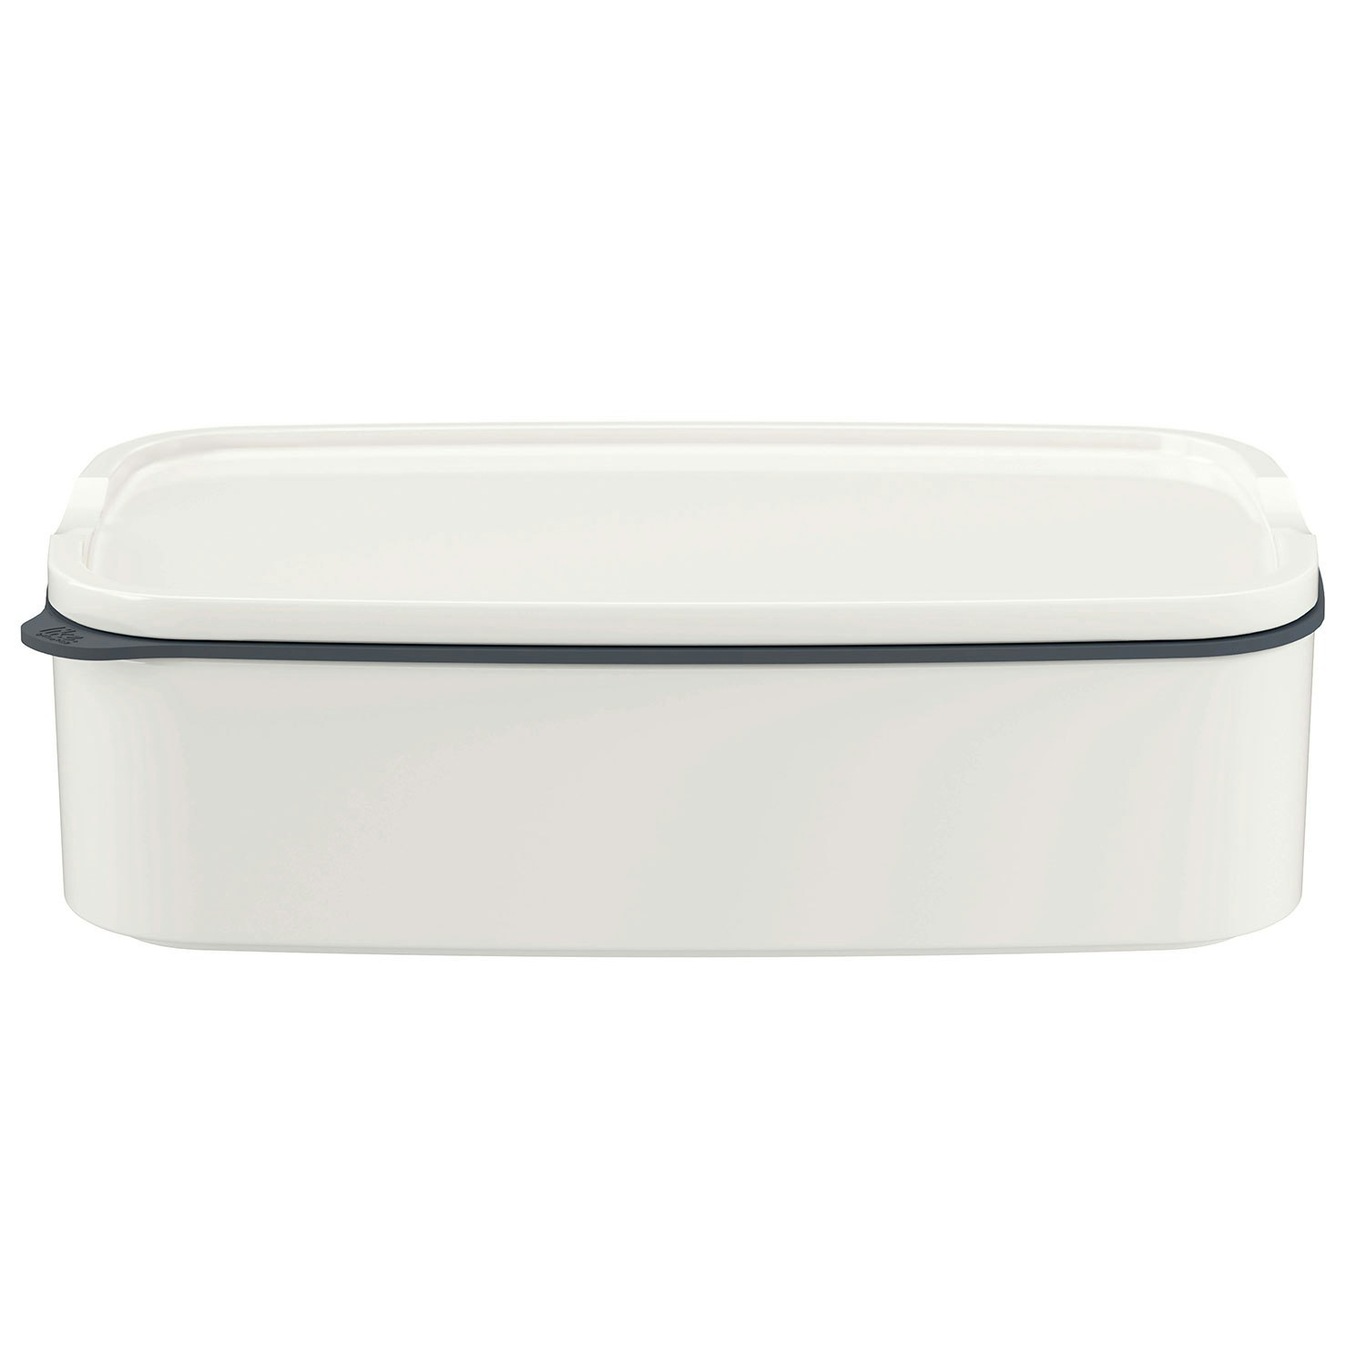 https://royaldesign.com/image/2/villeroy-boch-togotostay-lunch-box-white-20x13x6-cm-0?w=800&quality=80